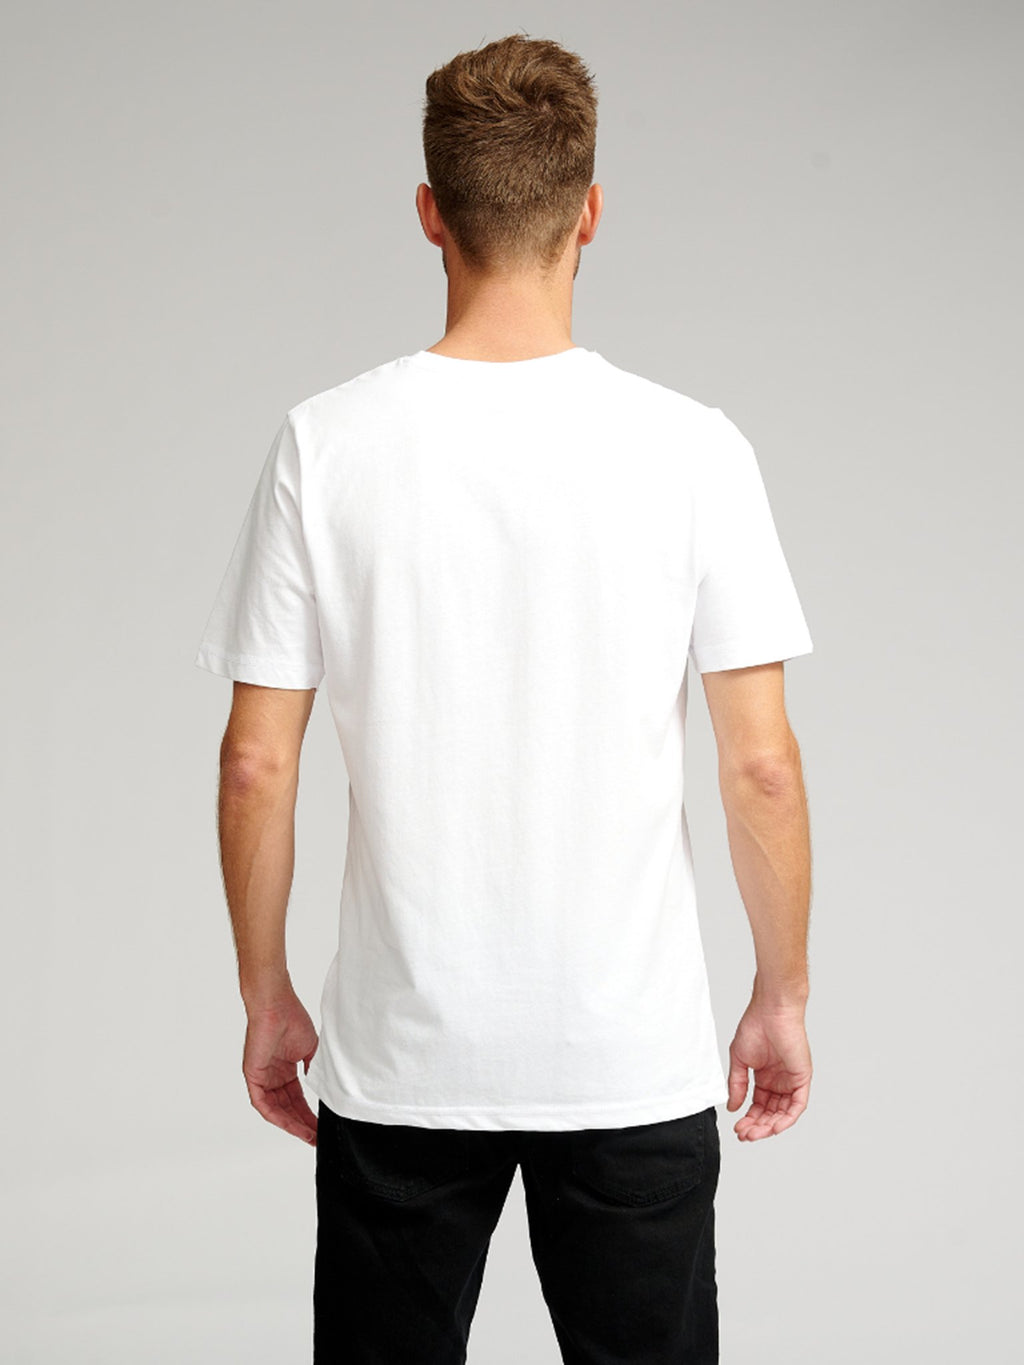 Bio -Basis -T -Shirt - Weiß